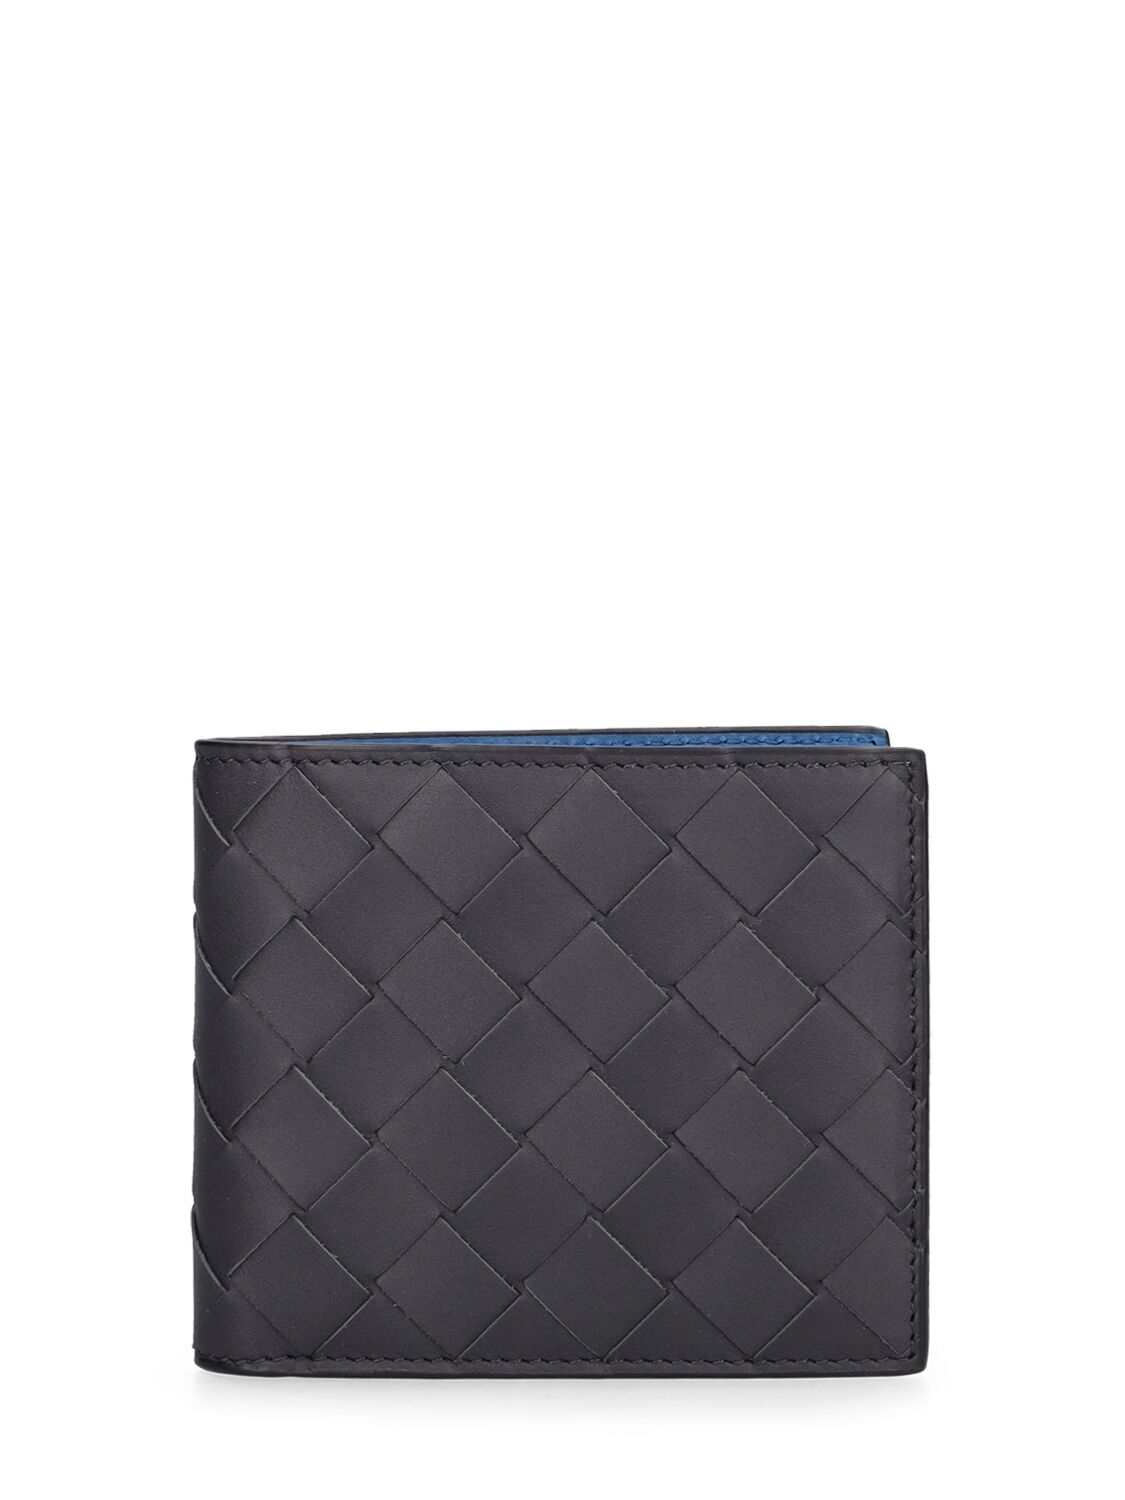 Image of Intrecciato Leather Bi-fold Wallet